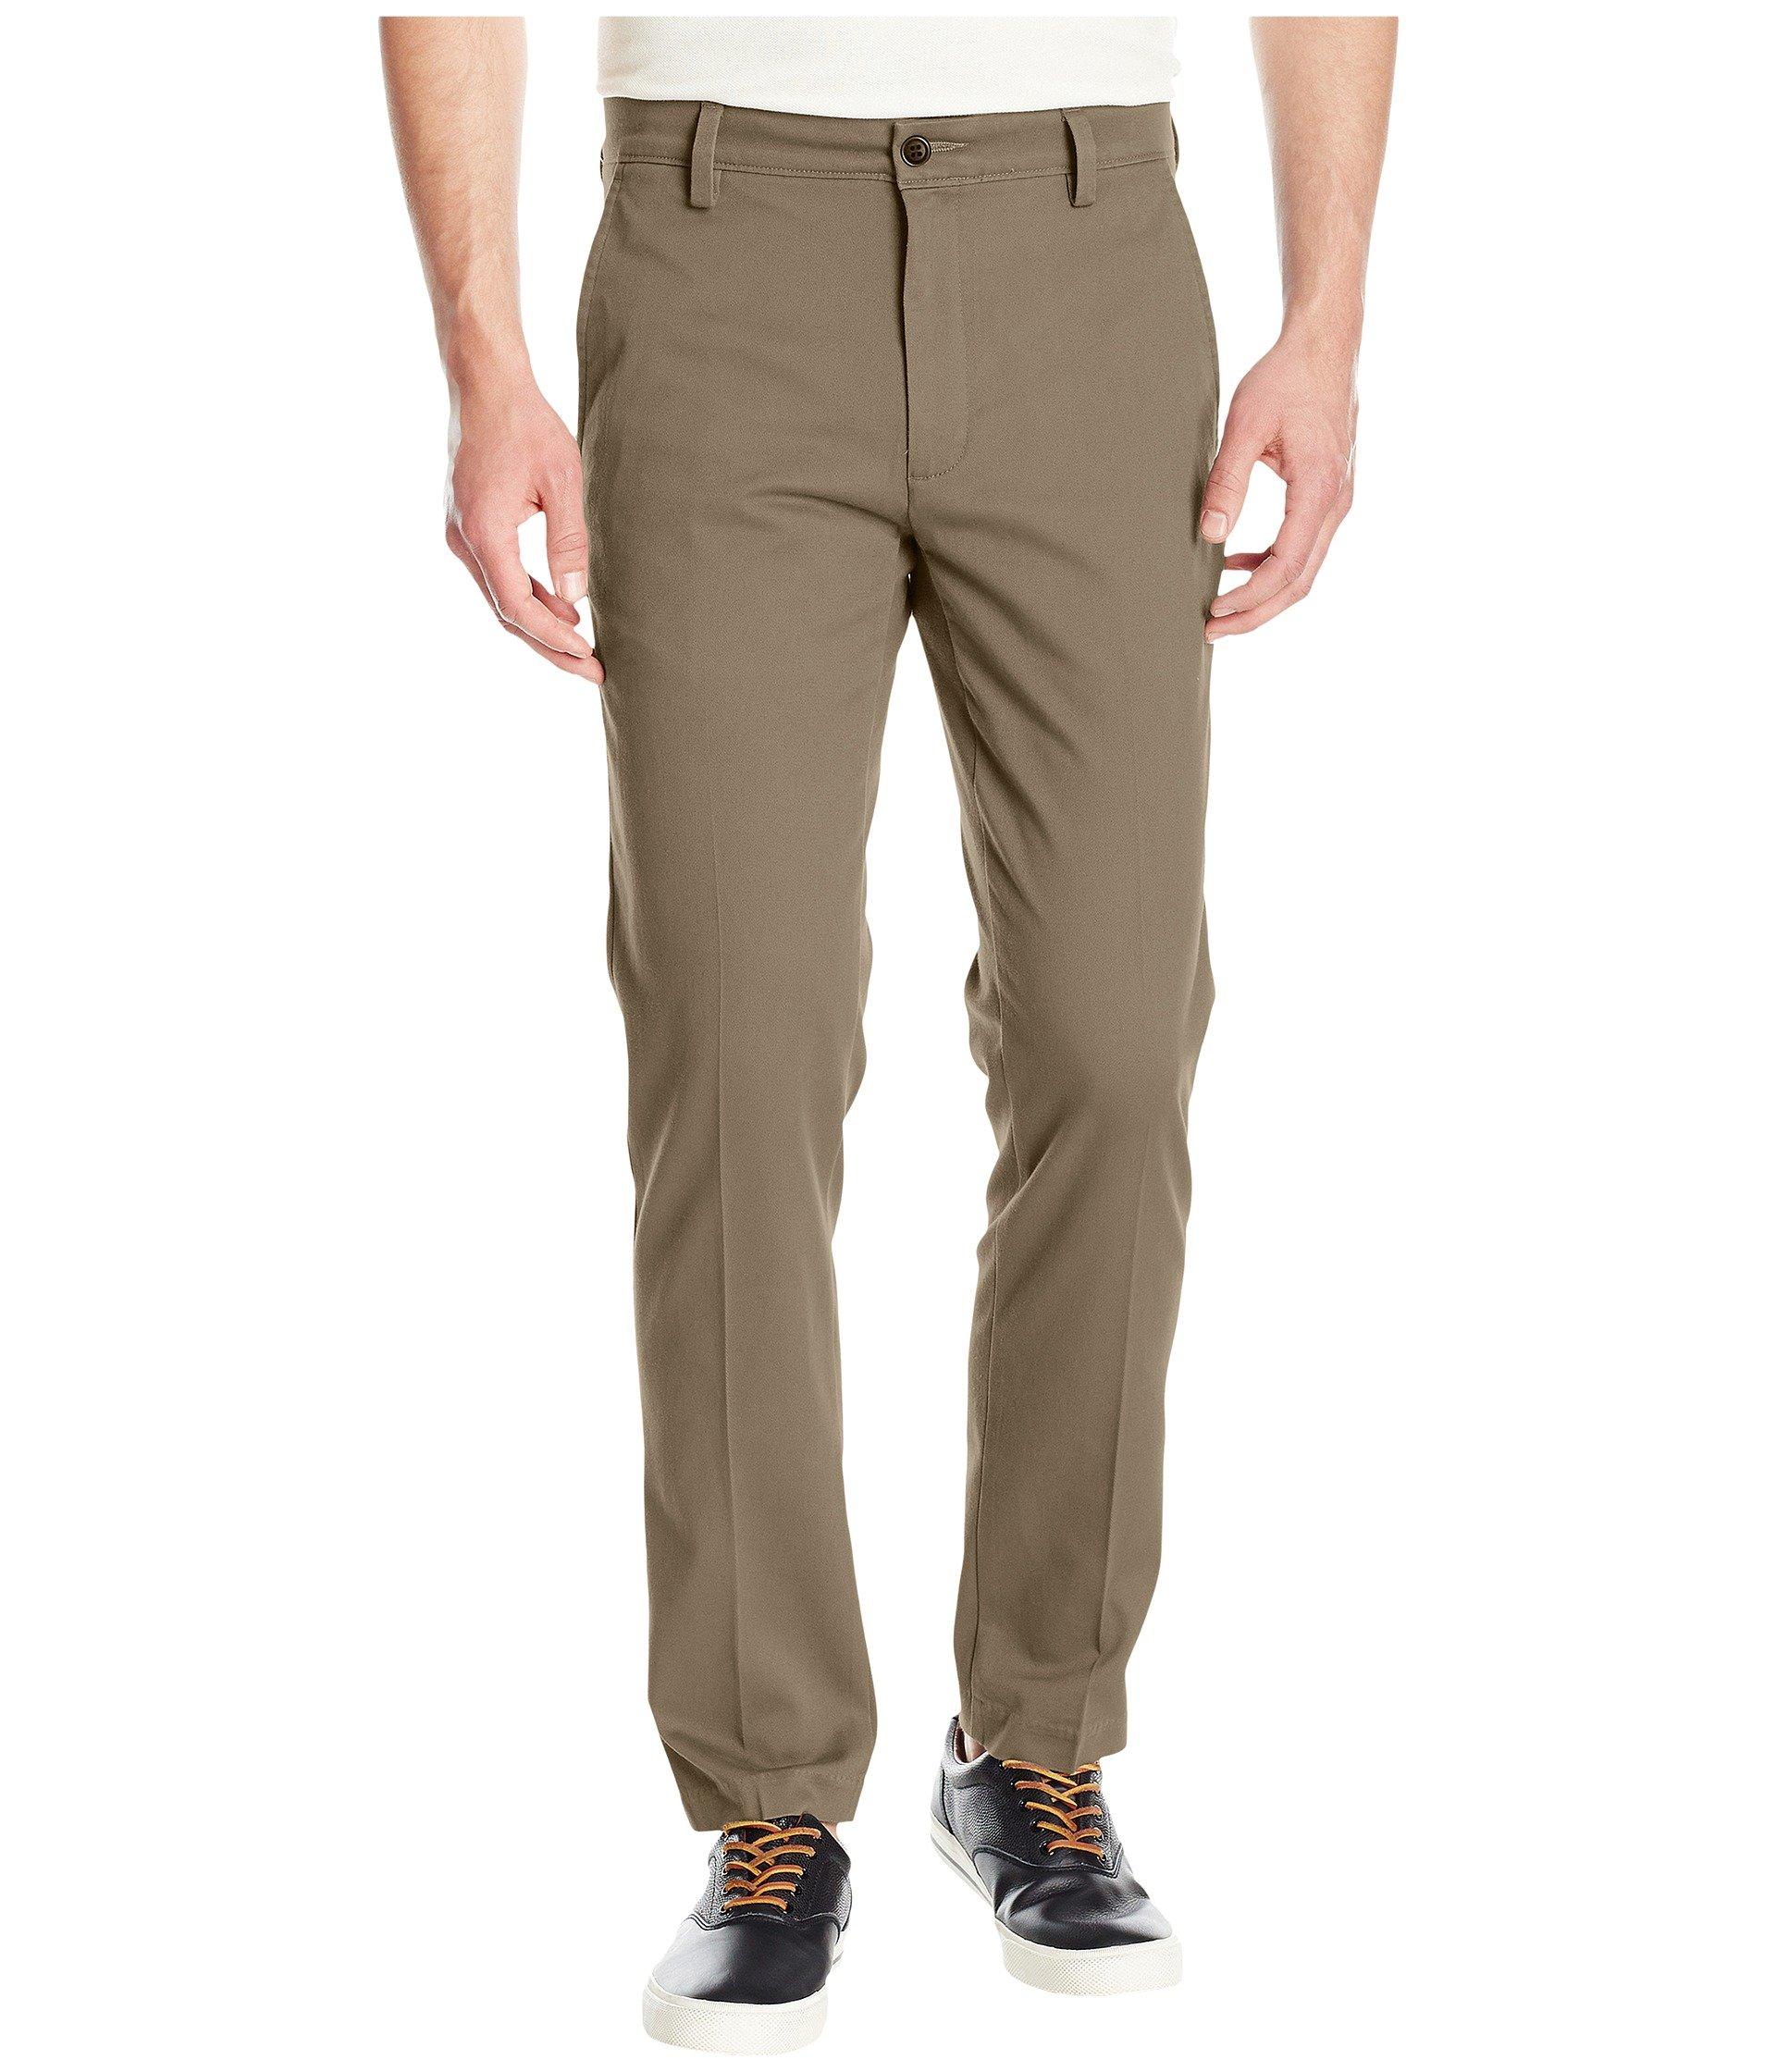 Dockers Cotton Easy Khaki Slim Fit Pants in Natural for Men - Lyst